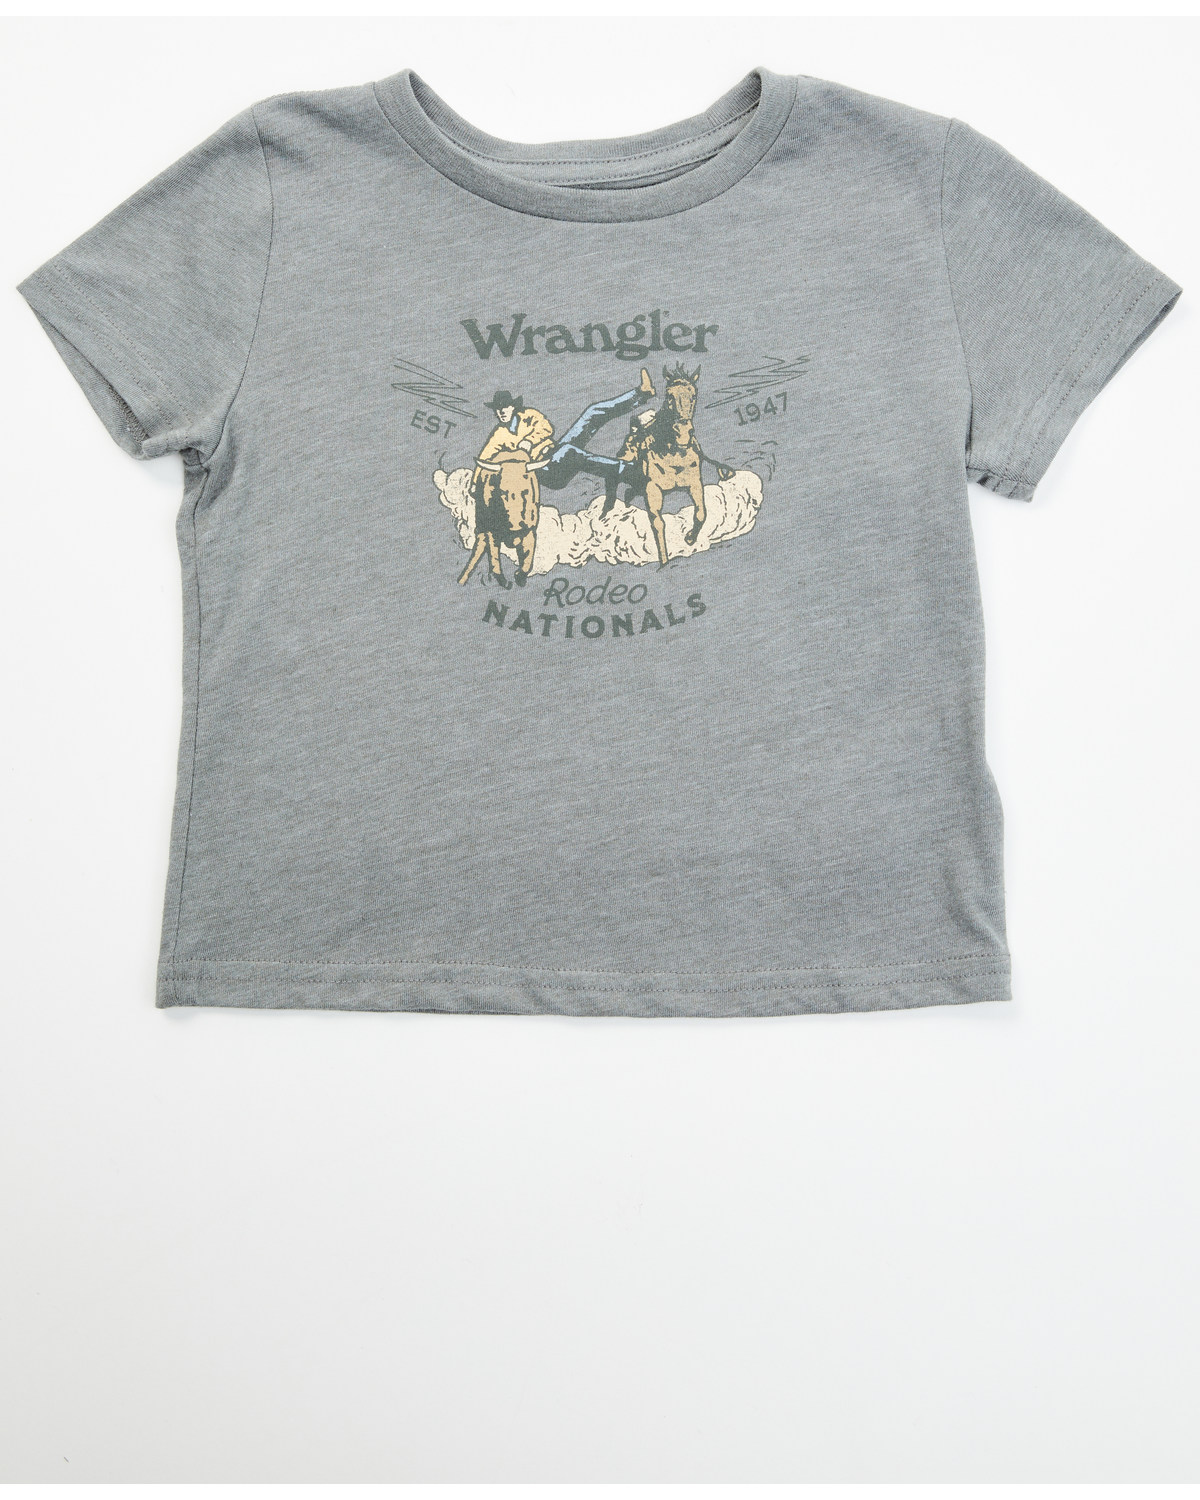 Wrangler Toddler Boys' Rodeo Nationals Short Sleeve Graphic T-Shirt